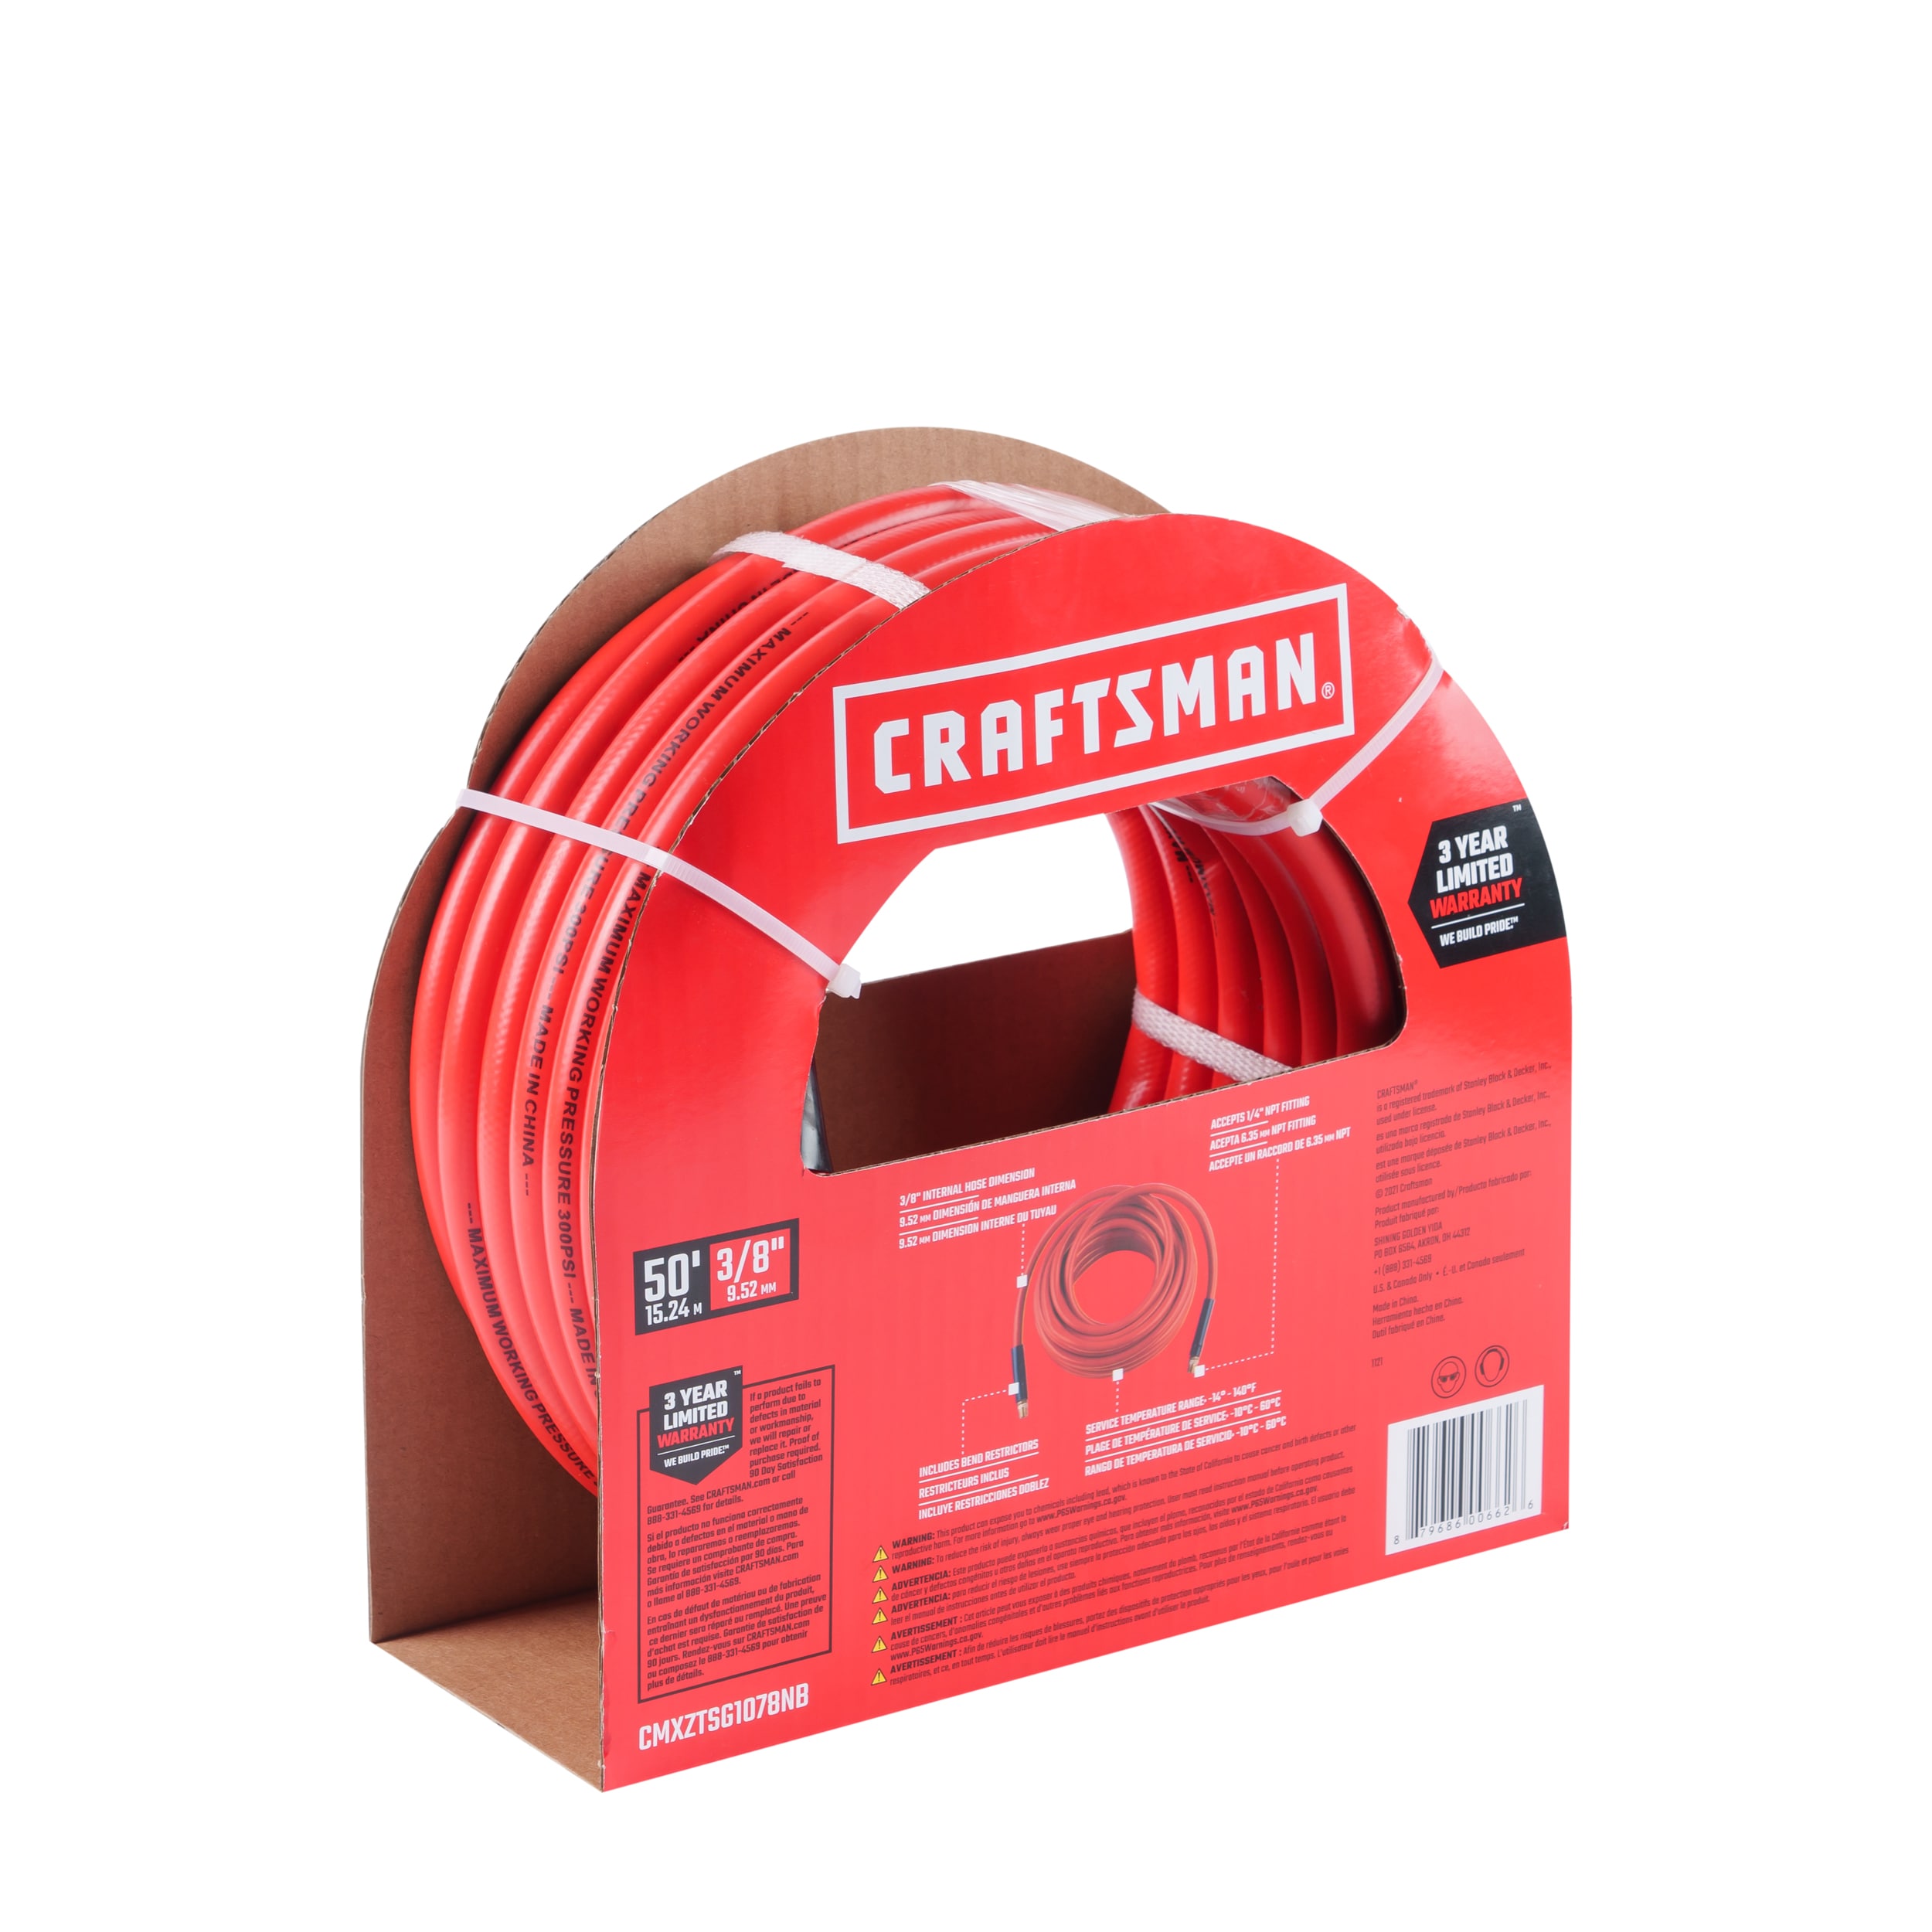 CRAFTSMAN Craftsman 3/8-in 50-Ft PVC Air Hose